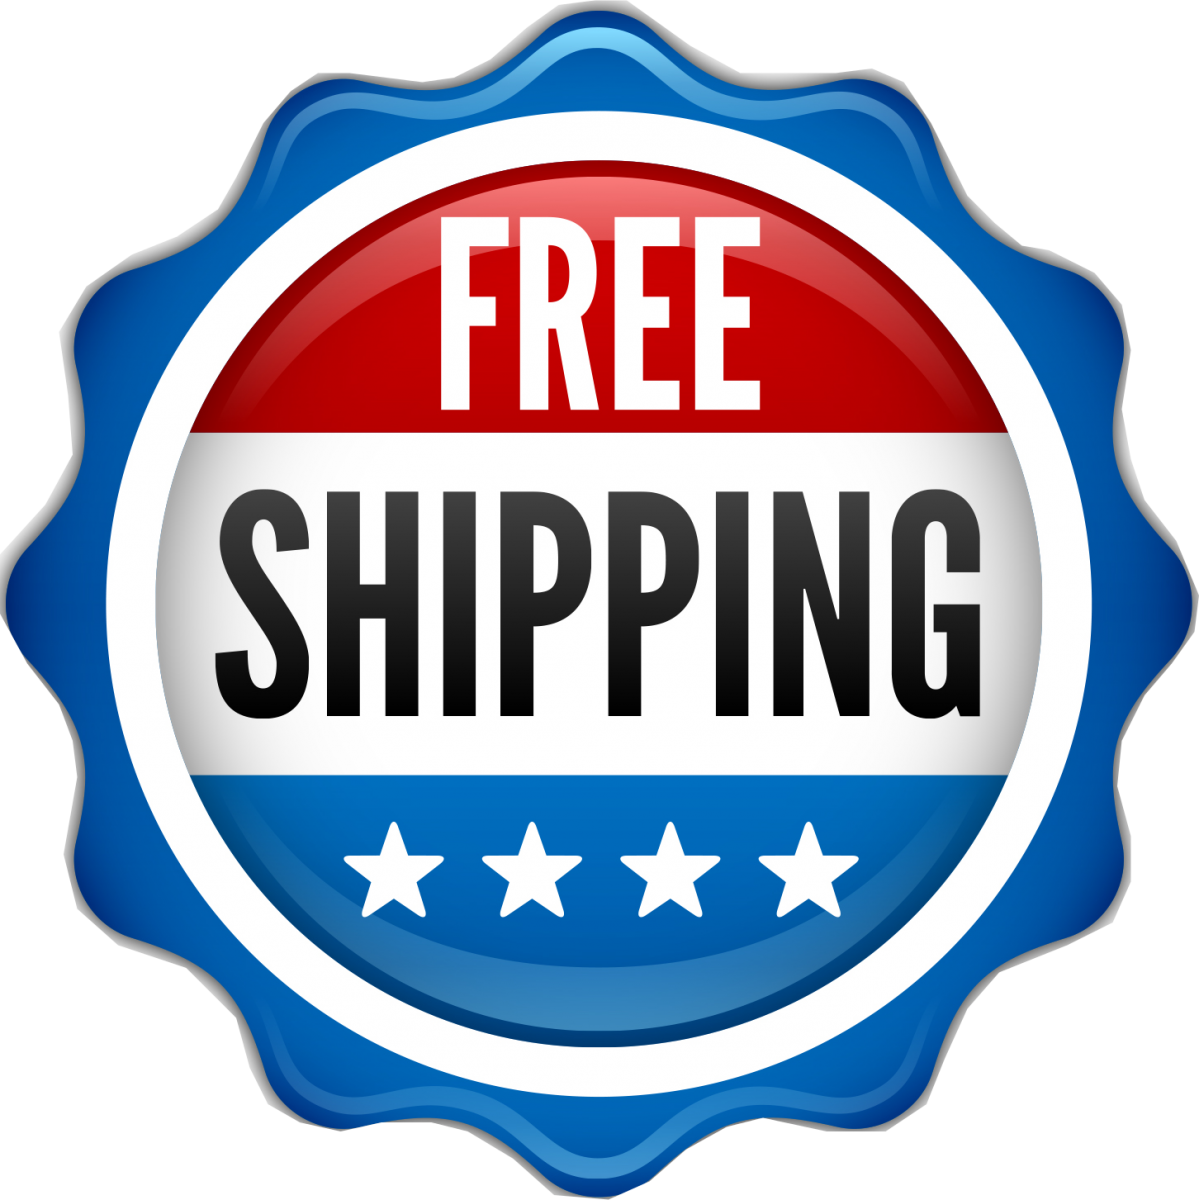 Free Shipping Transparent Image